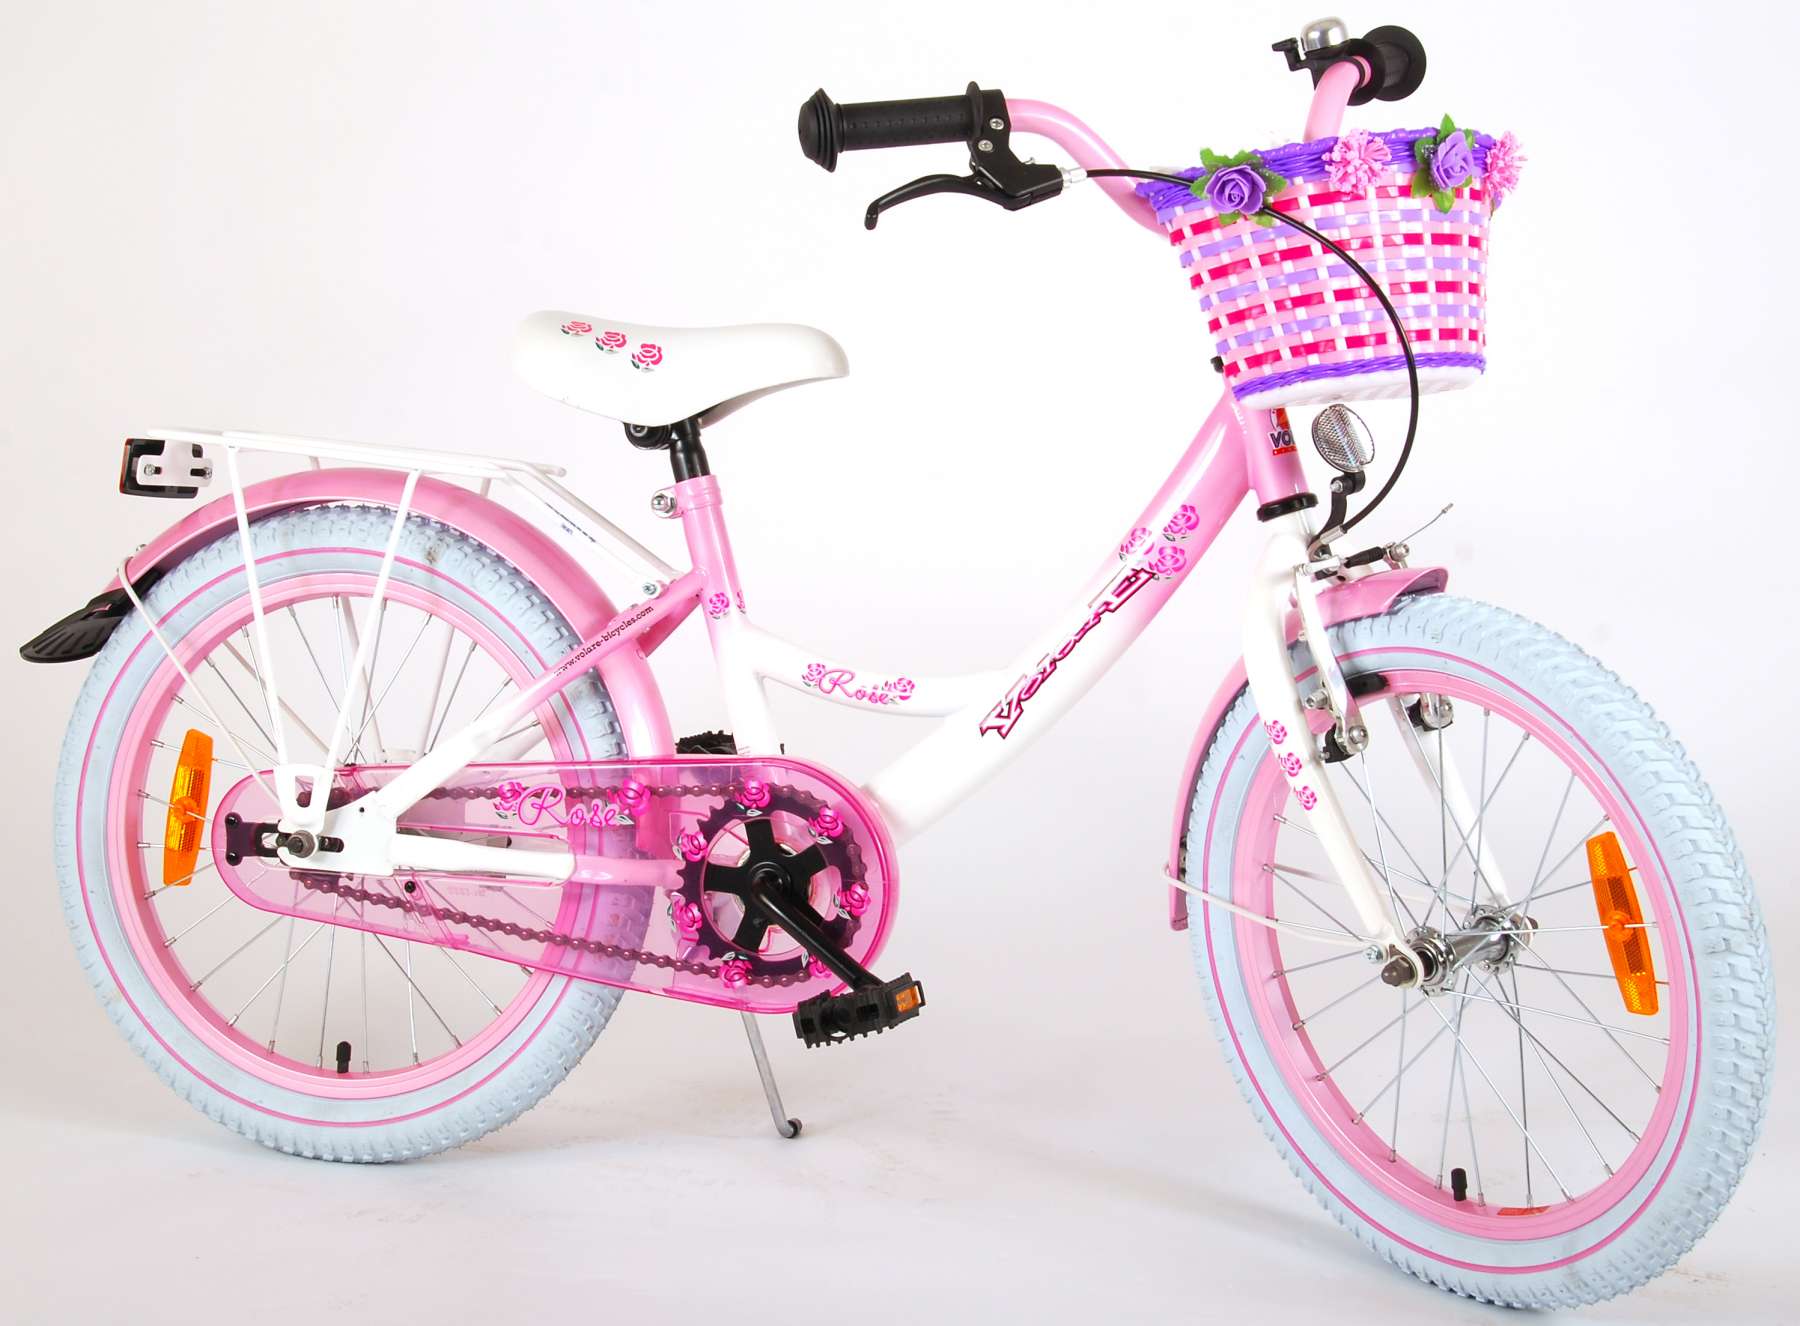 18 inch girls bike with gears